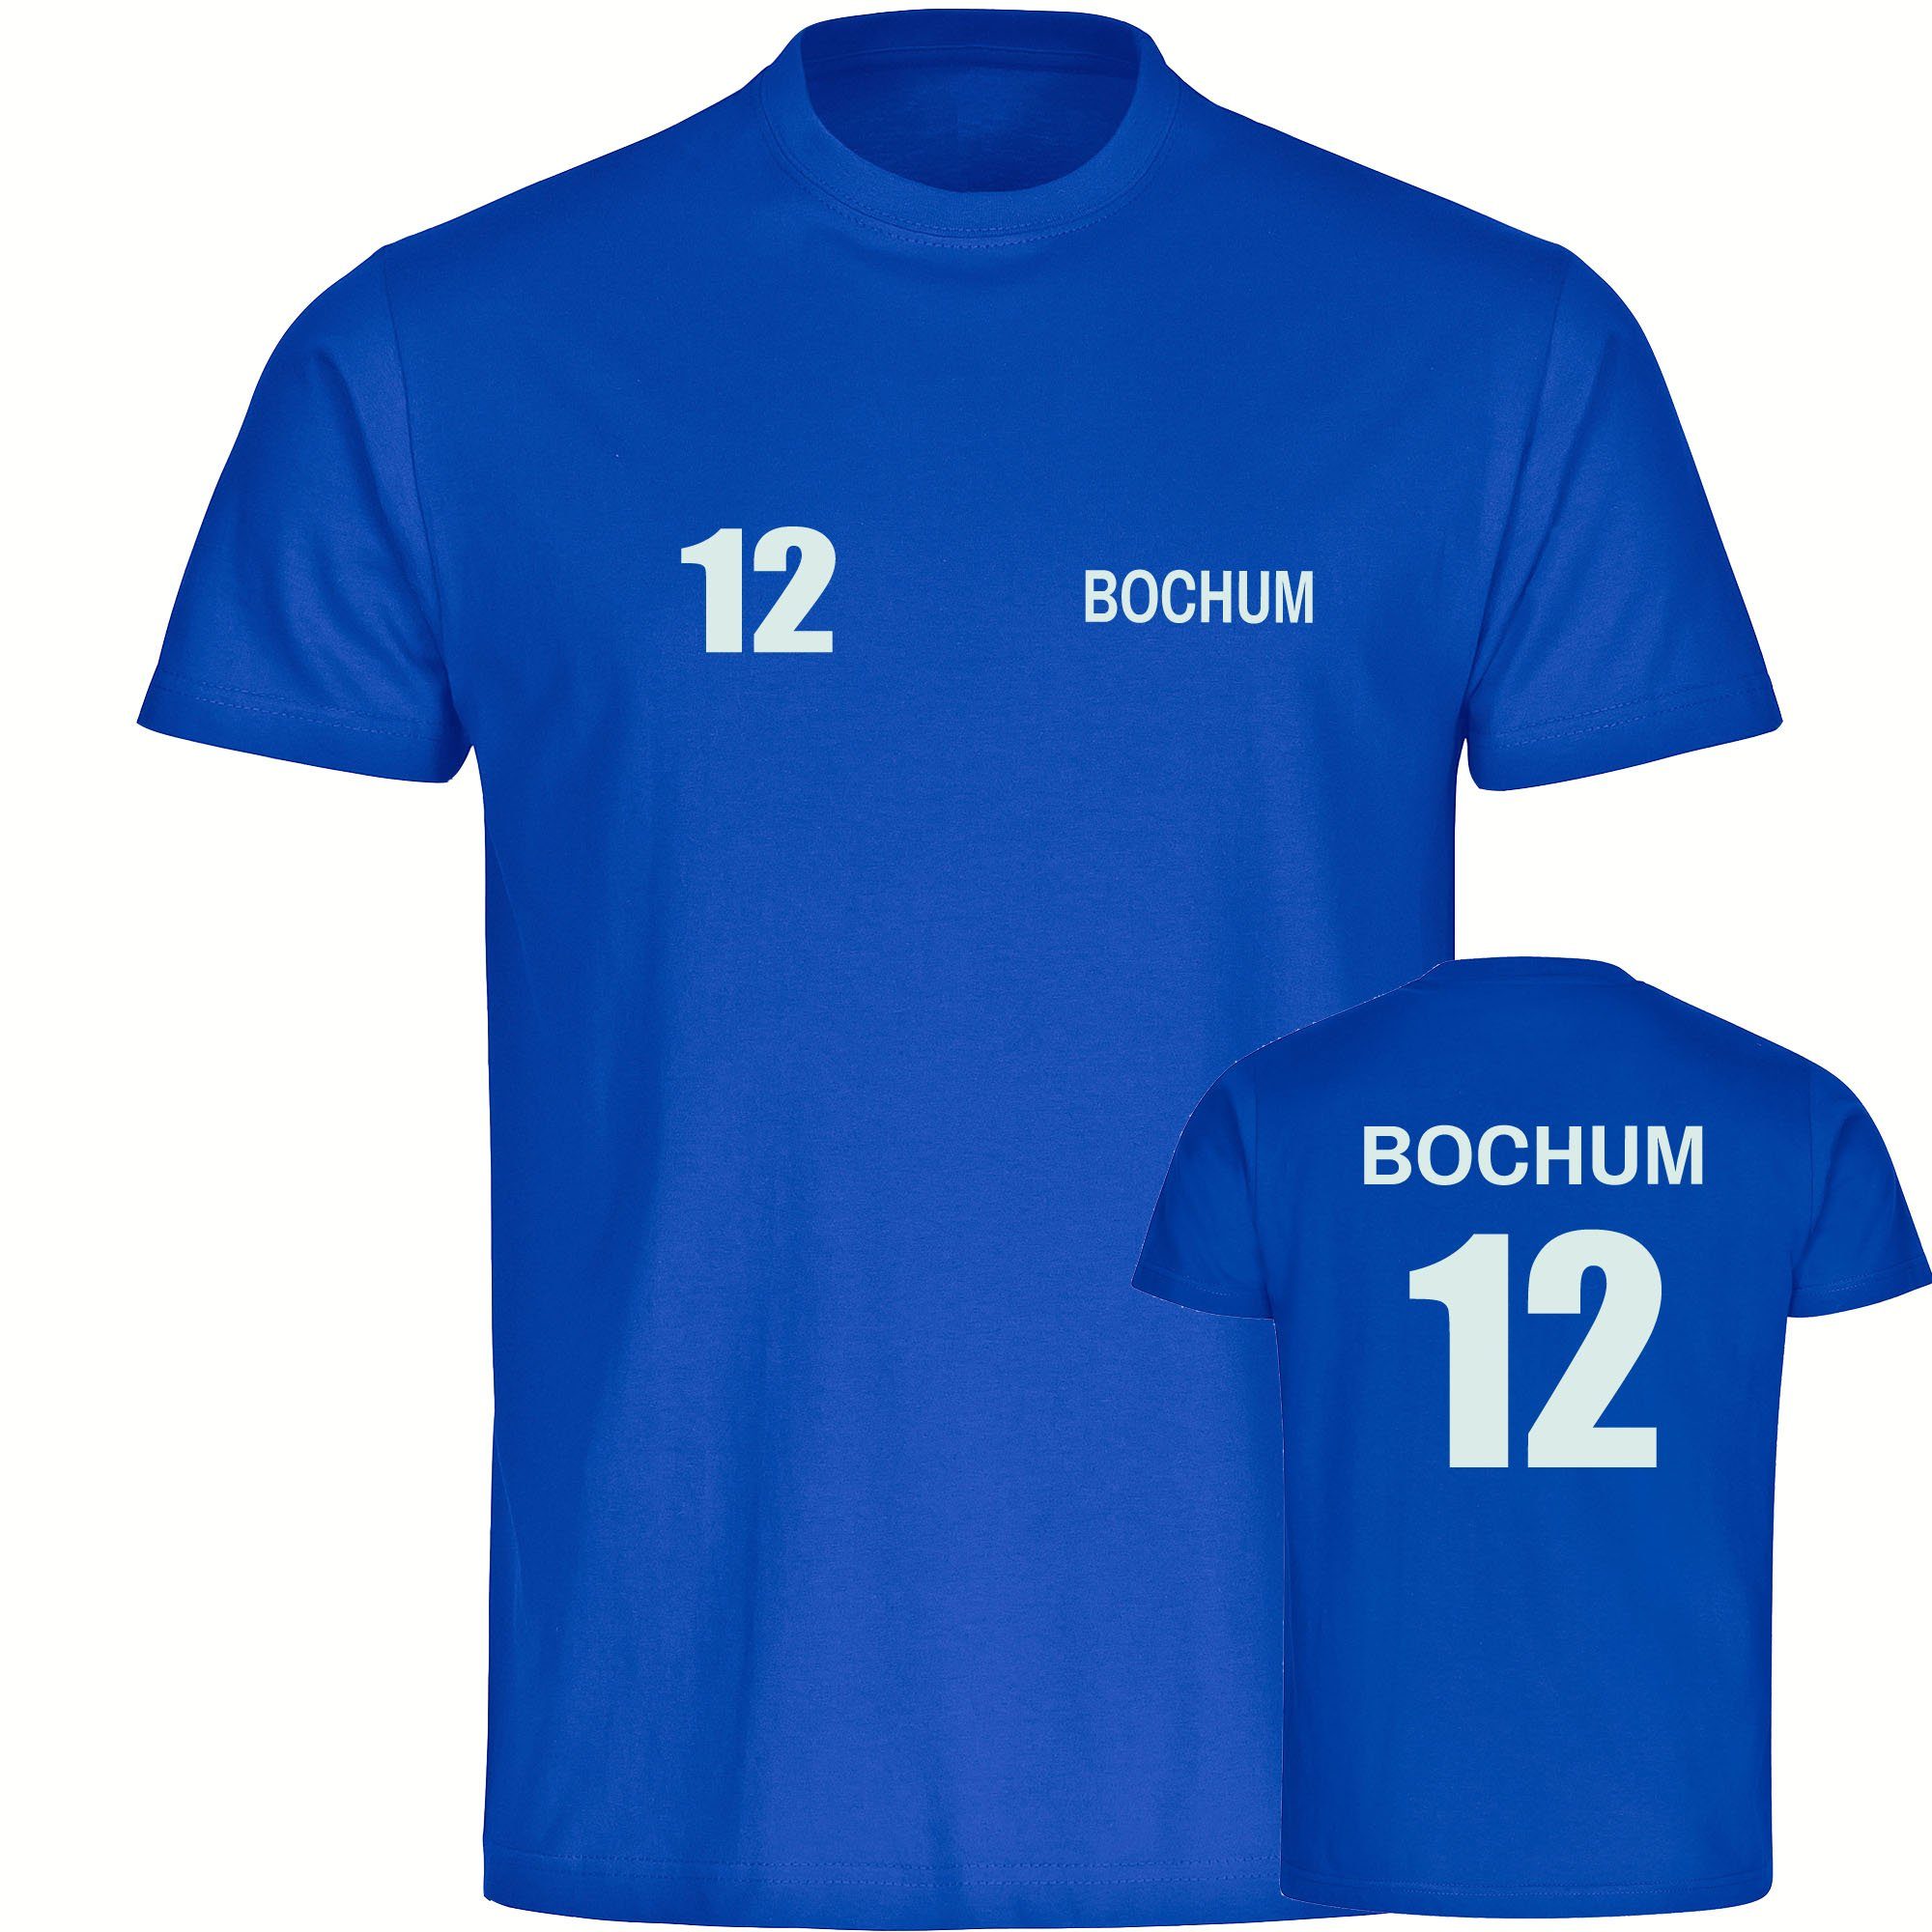 multifanshop T-Shirt Kinder Bochum - Trikot 12 - Boy Girl